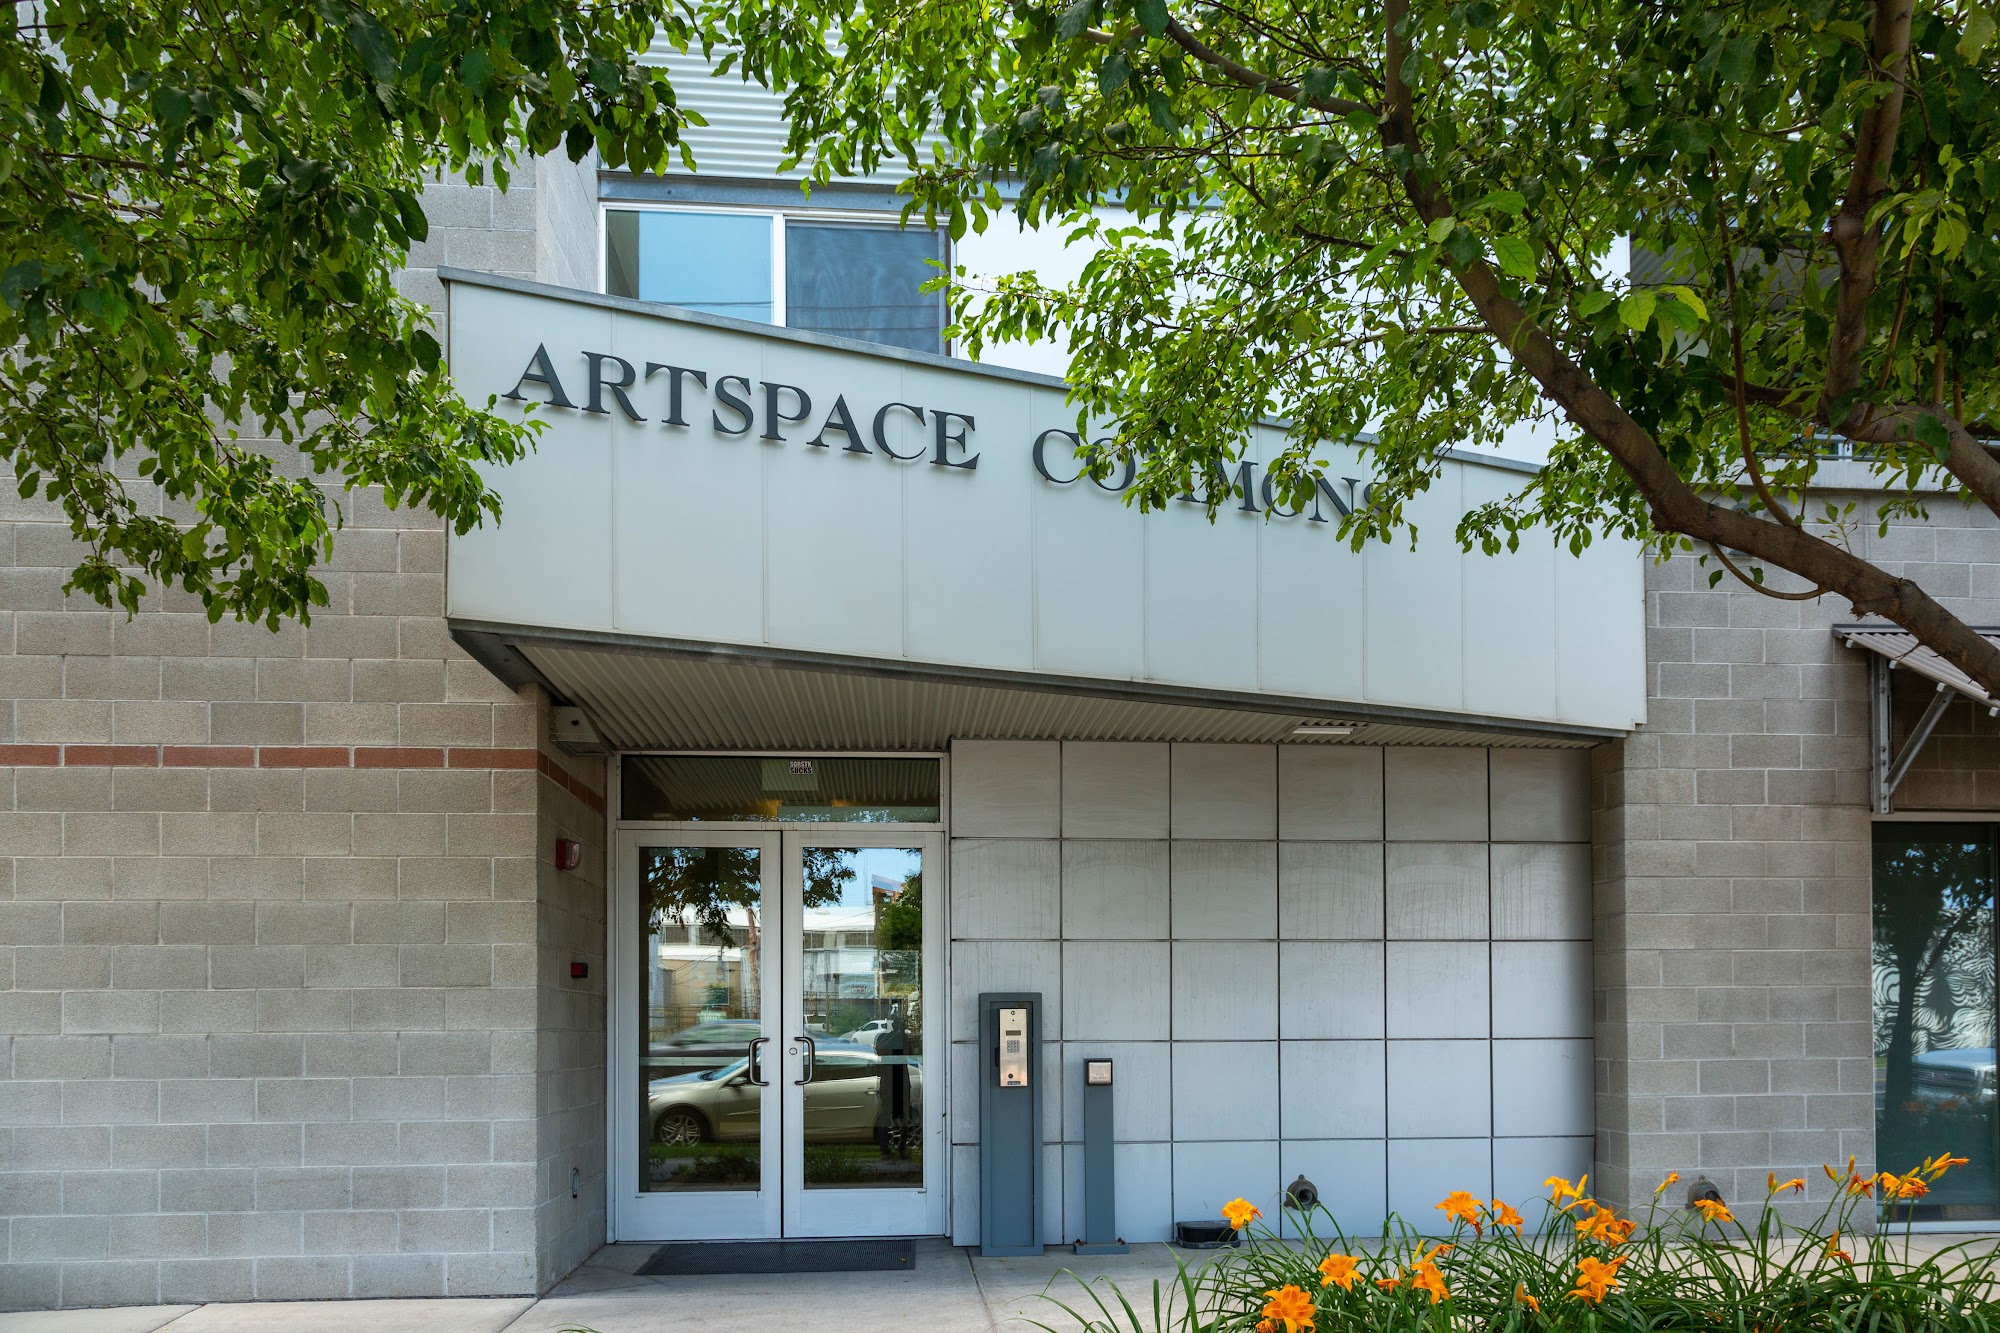 Artspace Commons